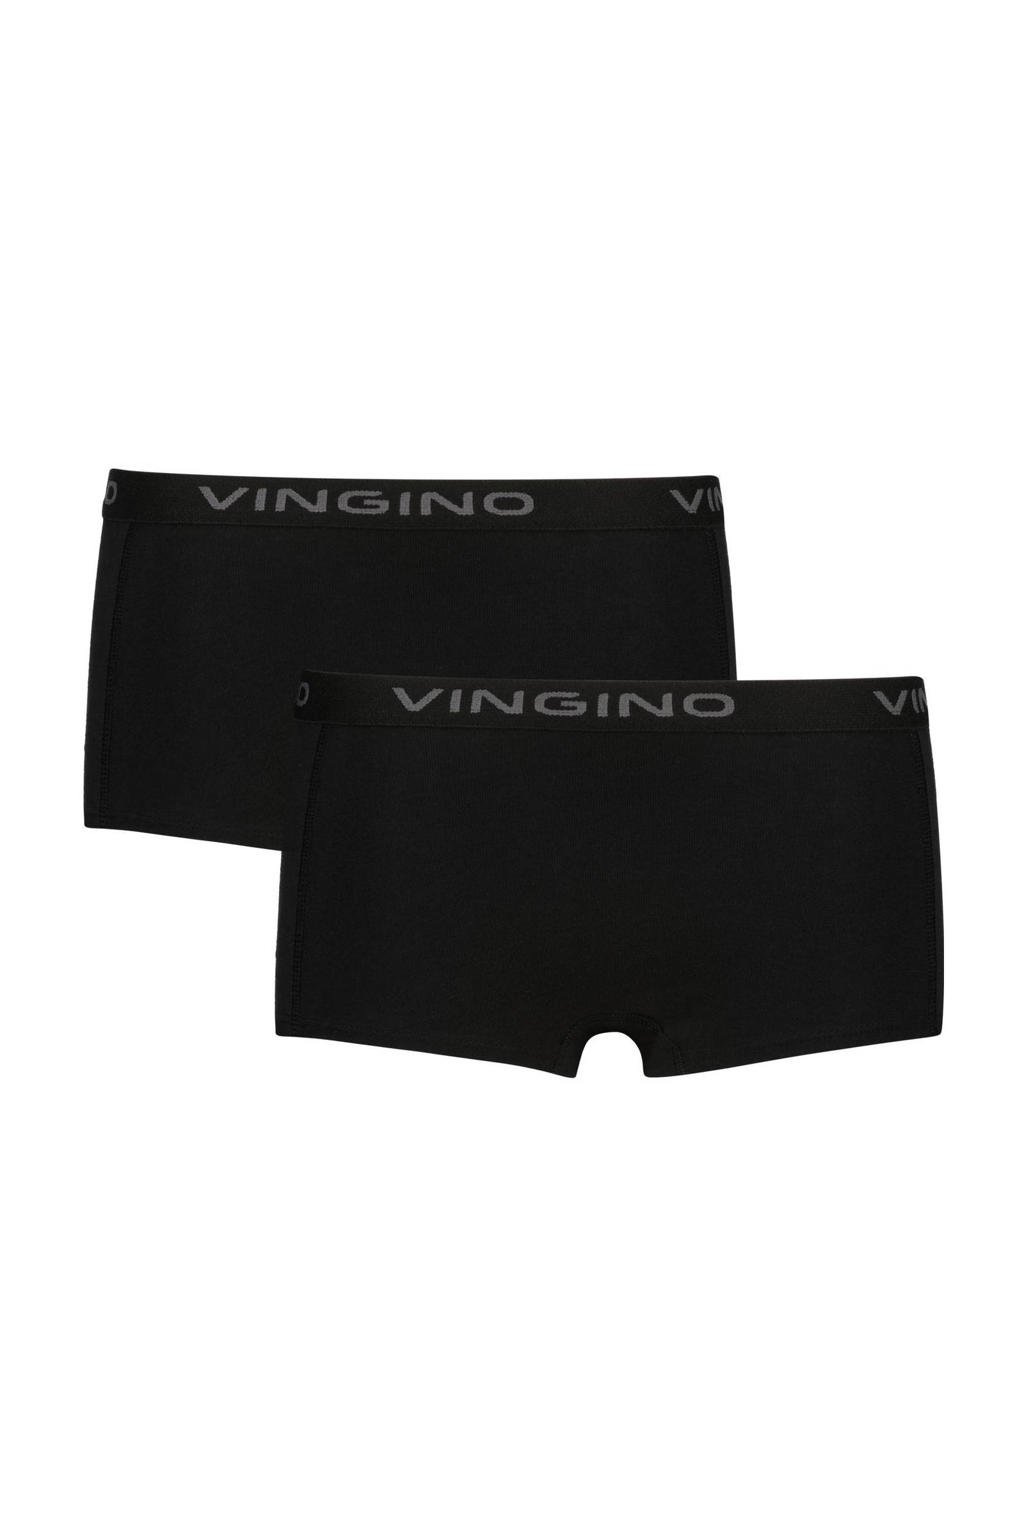 Vingino shorts - set van 2 zwart